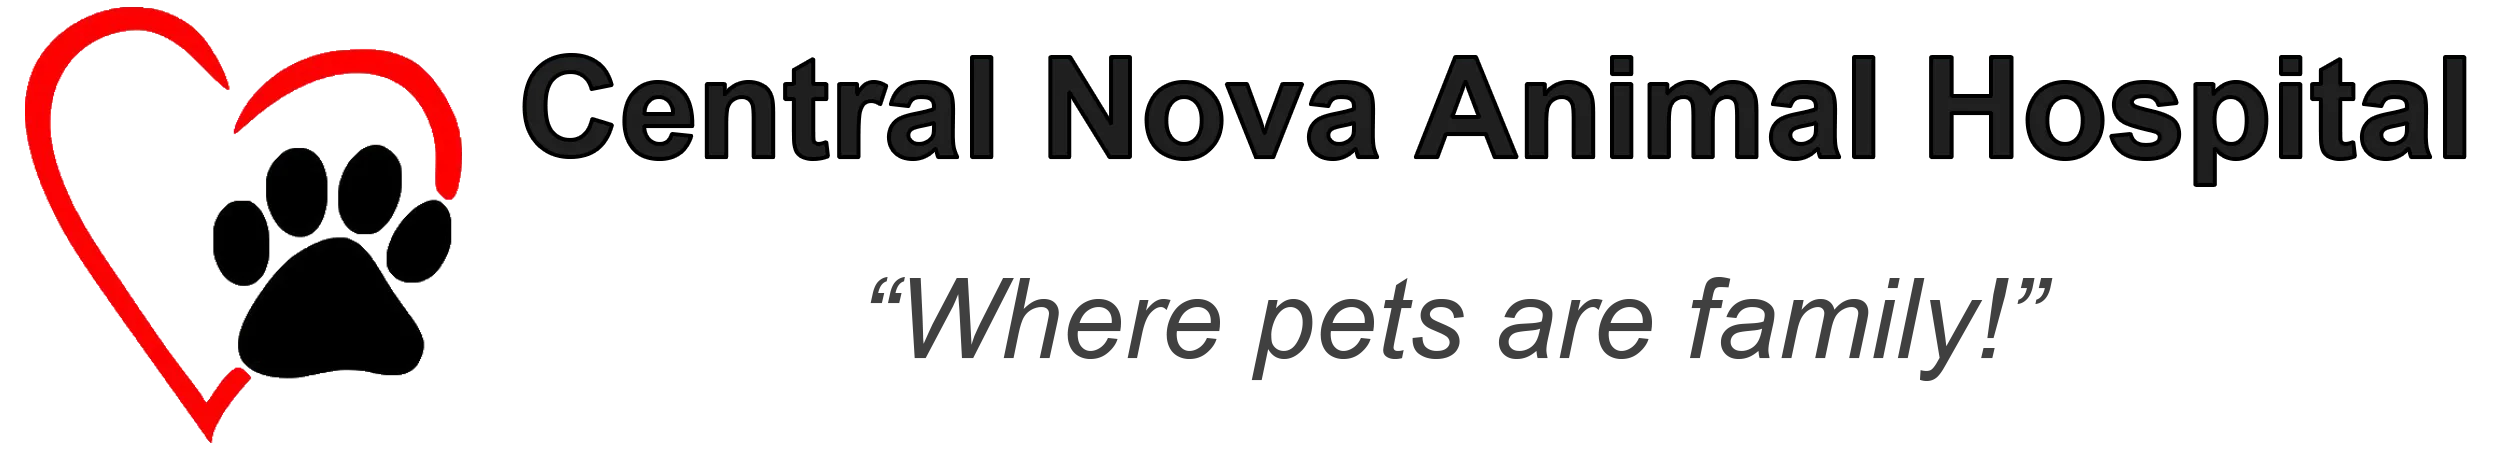 Central Nova Animal Hospital